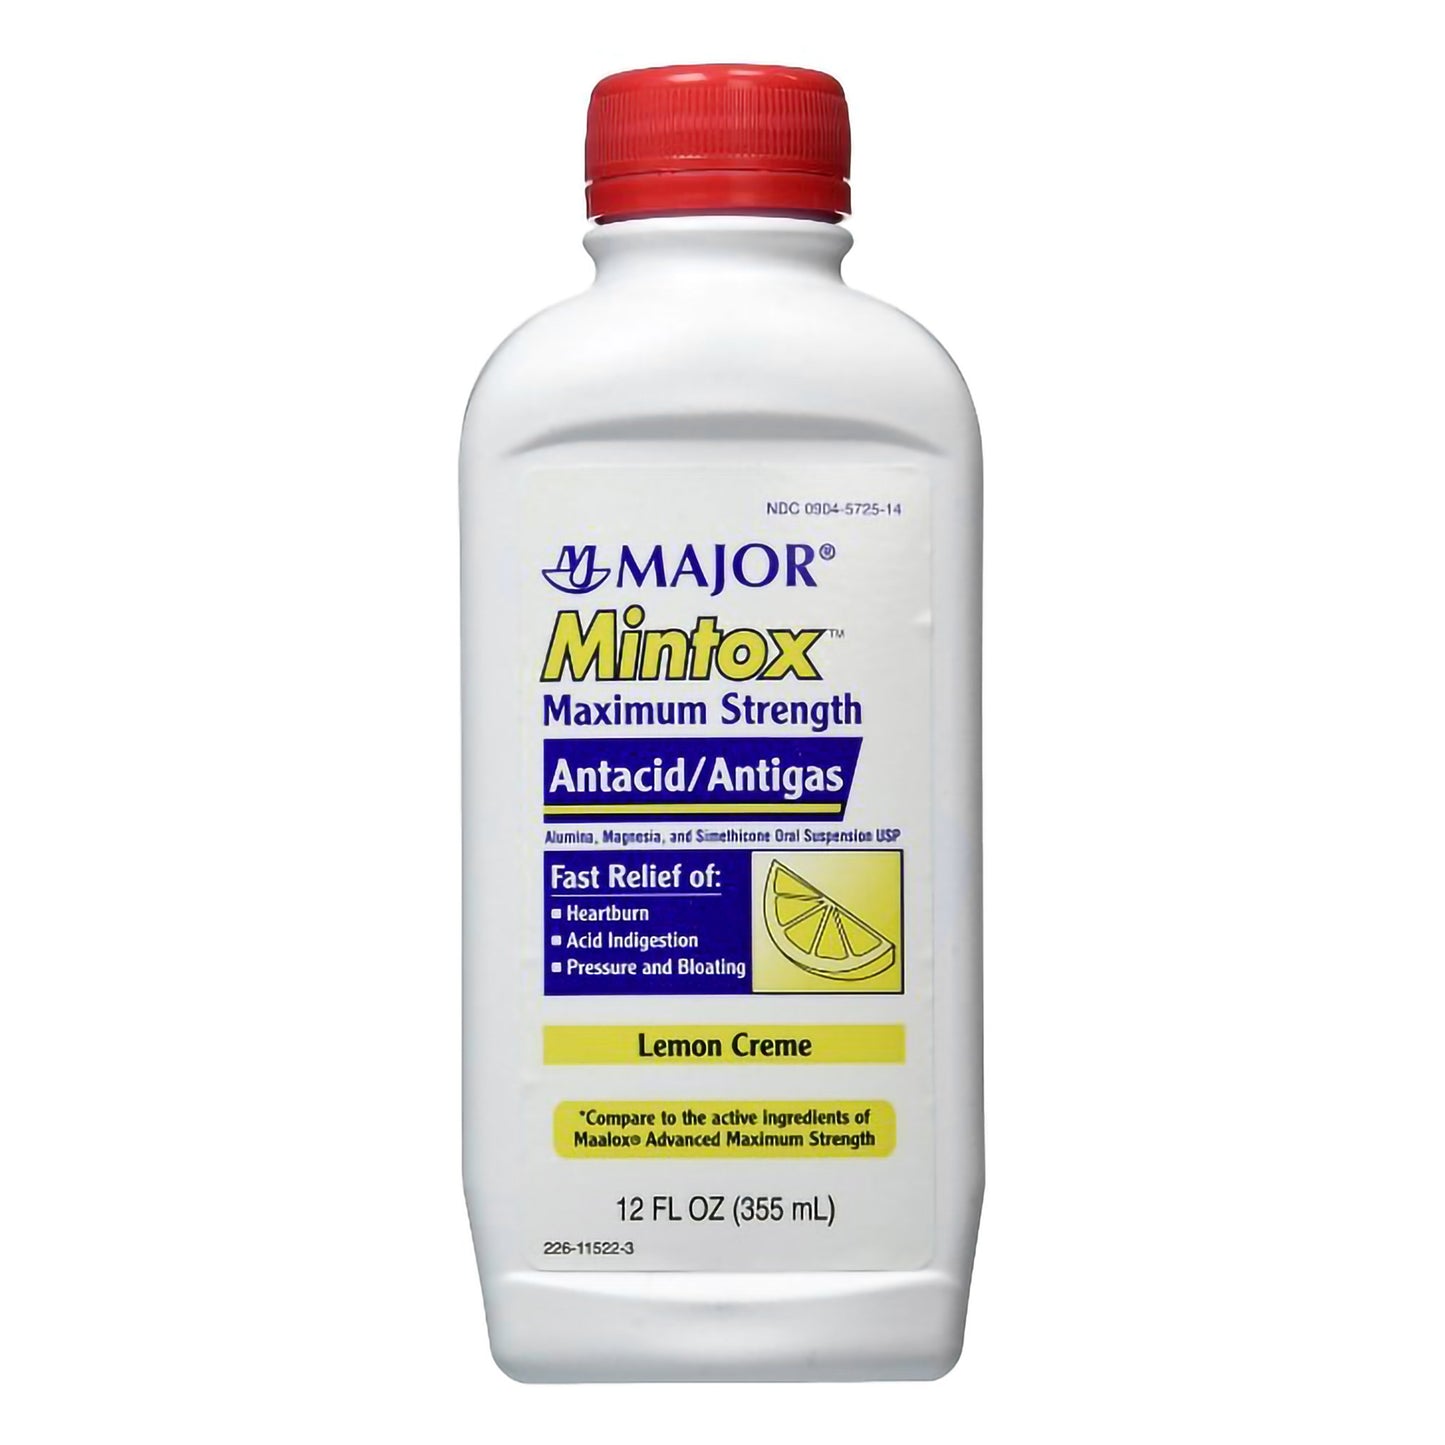 Major Mintox™ Maximum Strength Antacid, Lemon Creme, 12 fl oz.